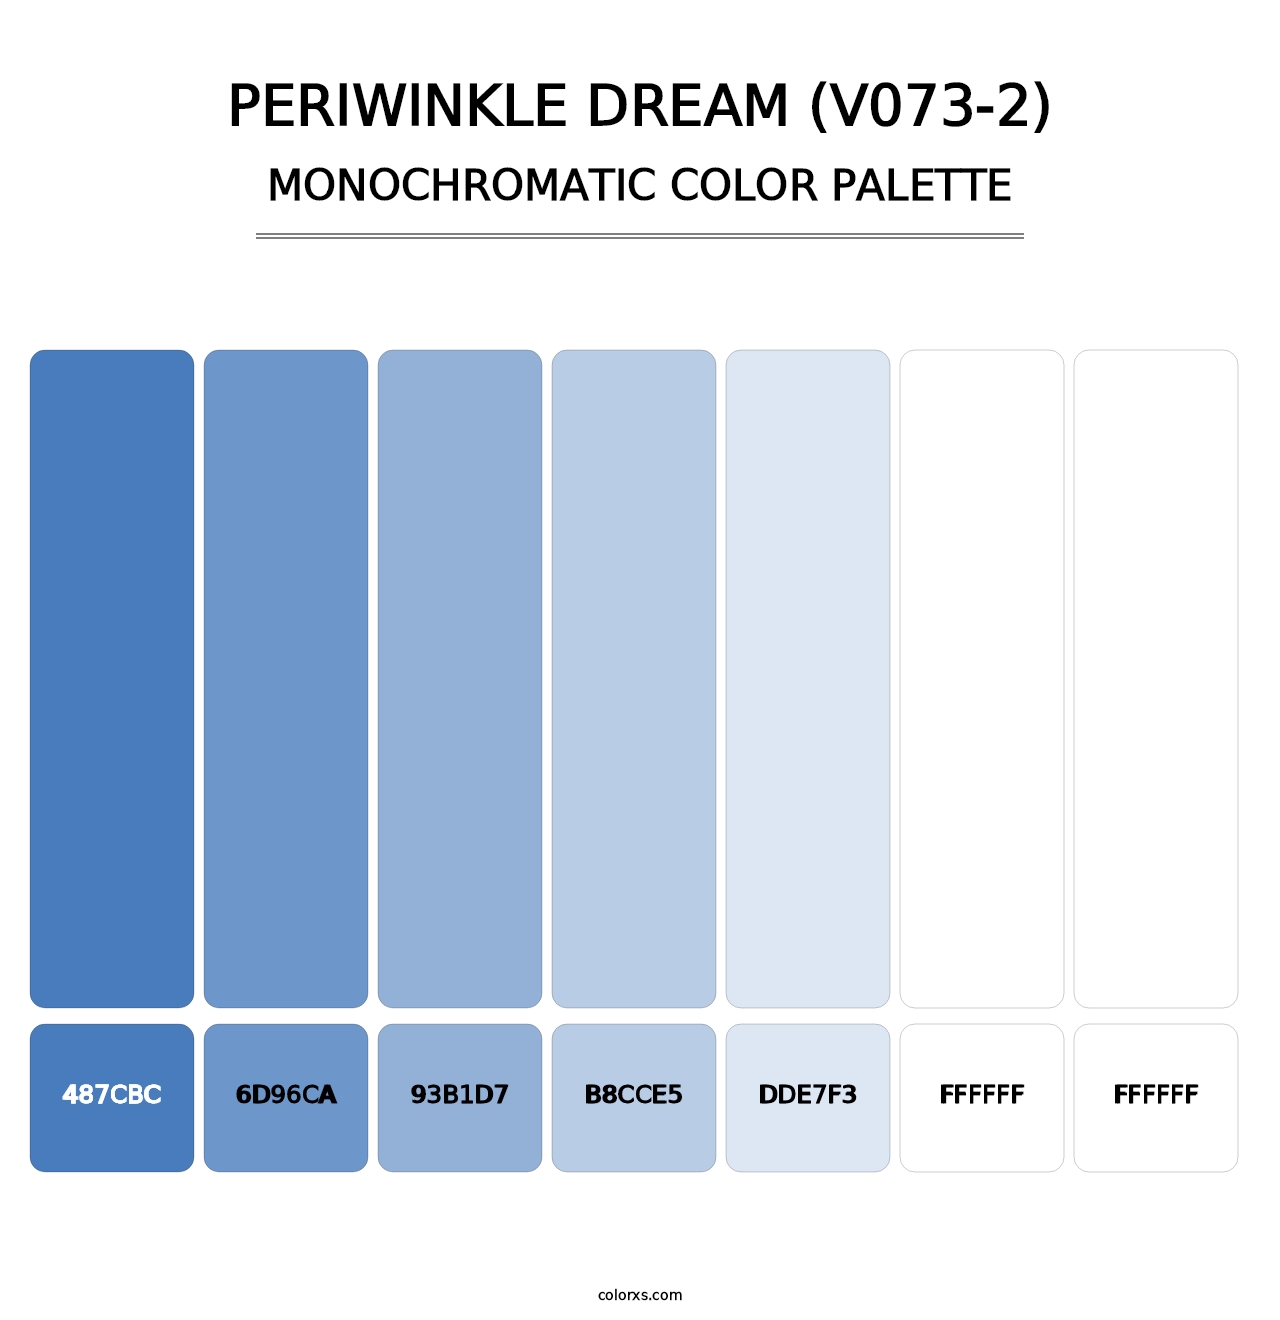 Periwinkle Dream (V073-2) - Monochromatic Color Palette